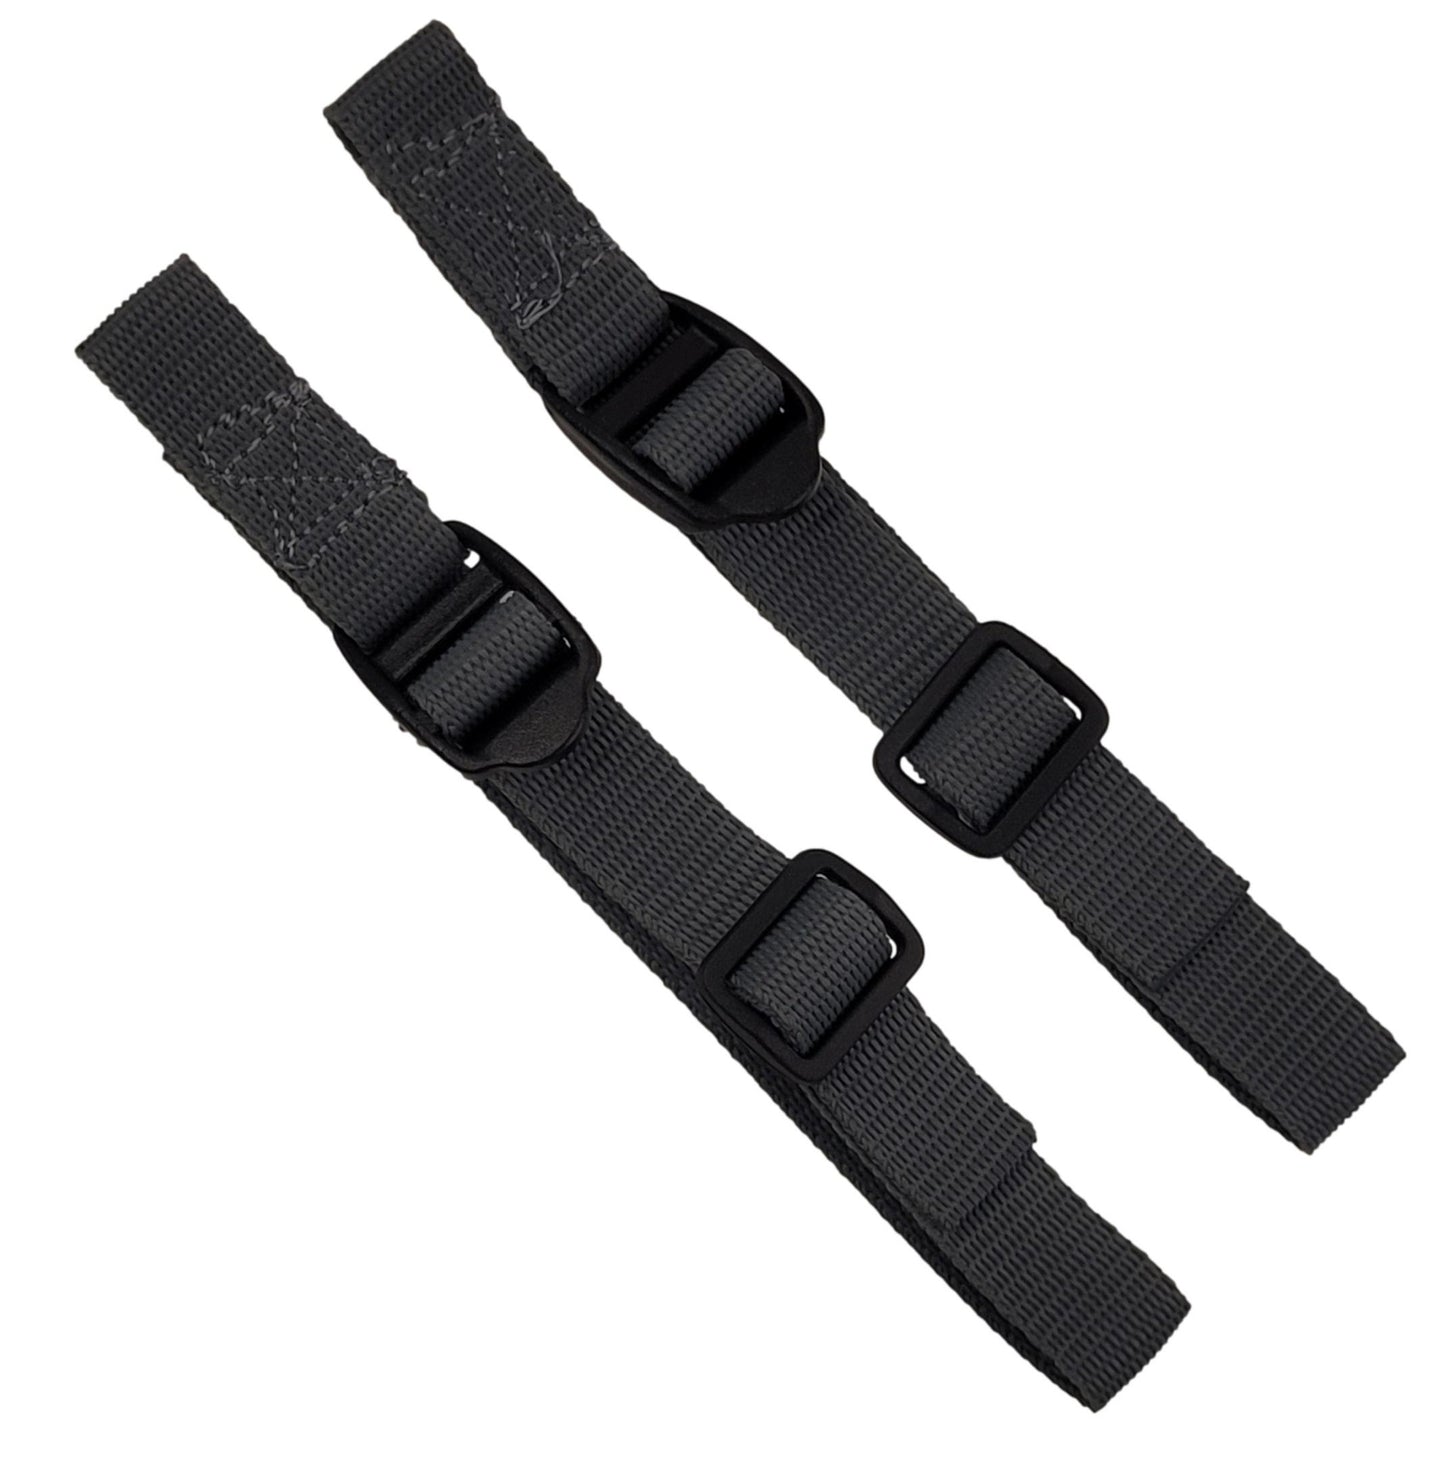 19mm webbing strap in grey with ladderlock buckle (pair)